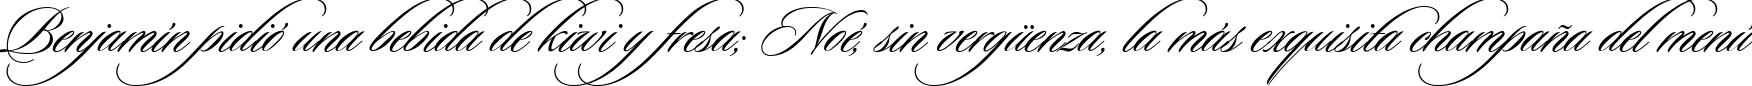 Пример написания шрифтом Sloop-ScriptThree текста на испанском